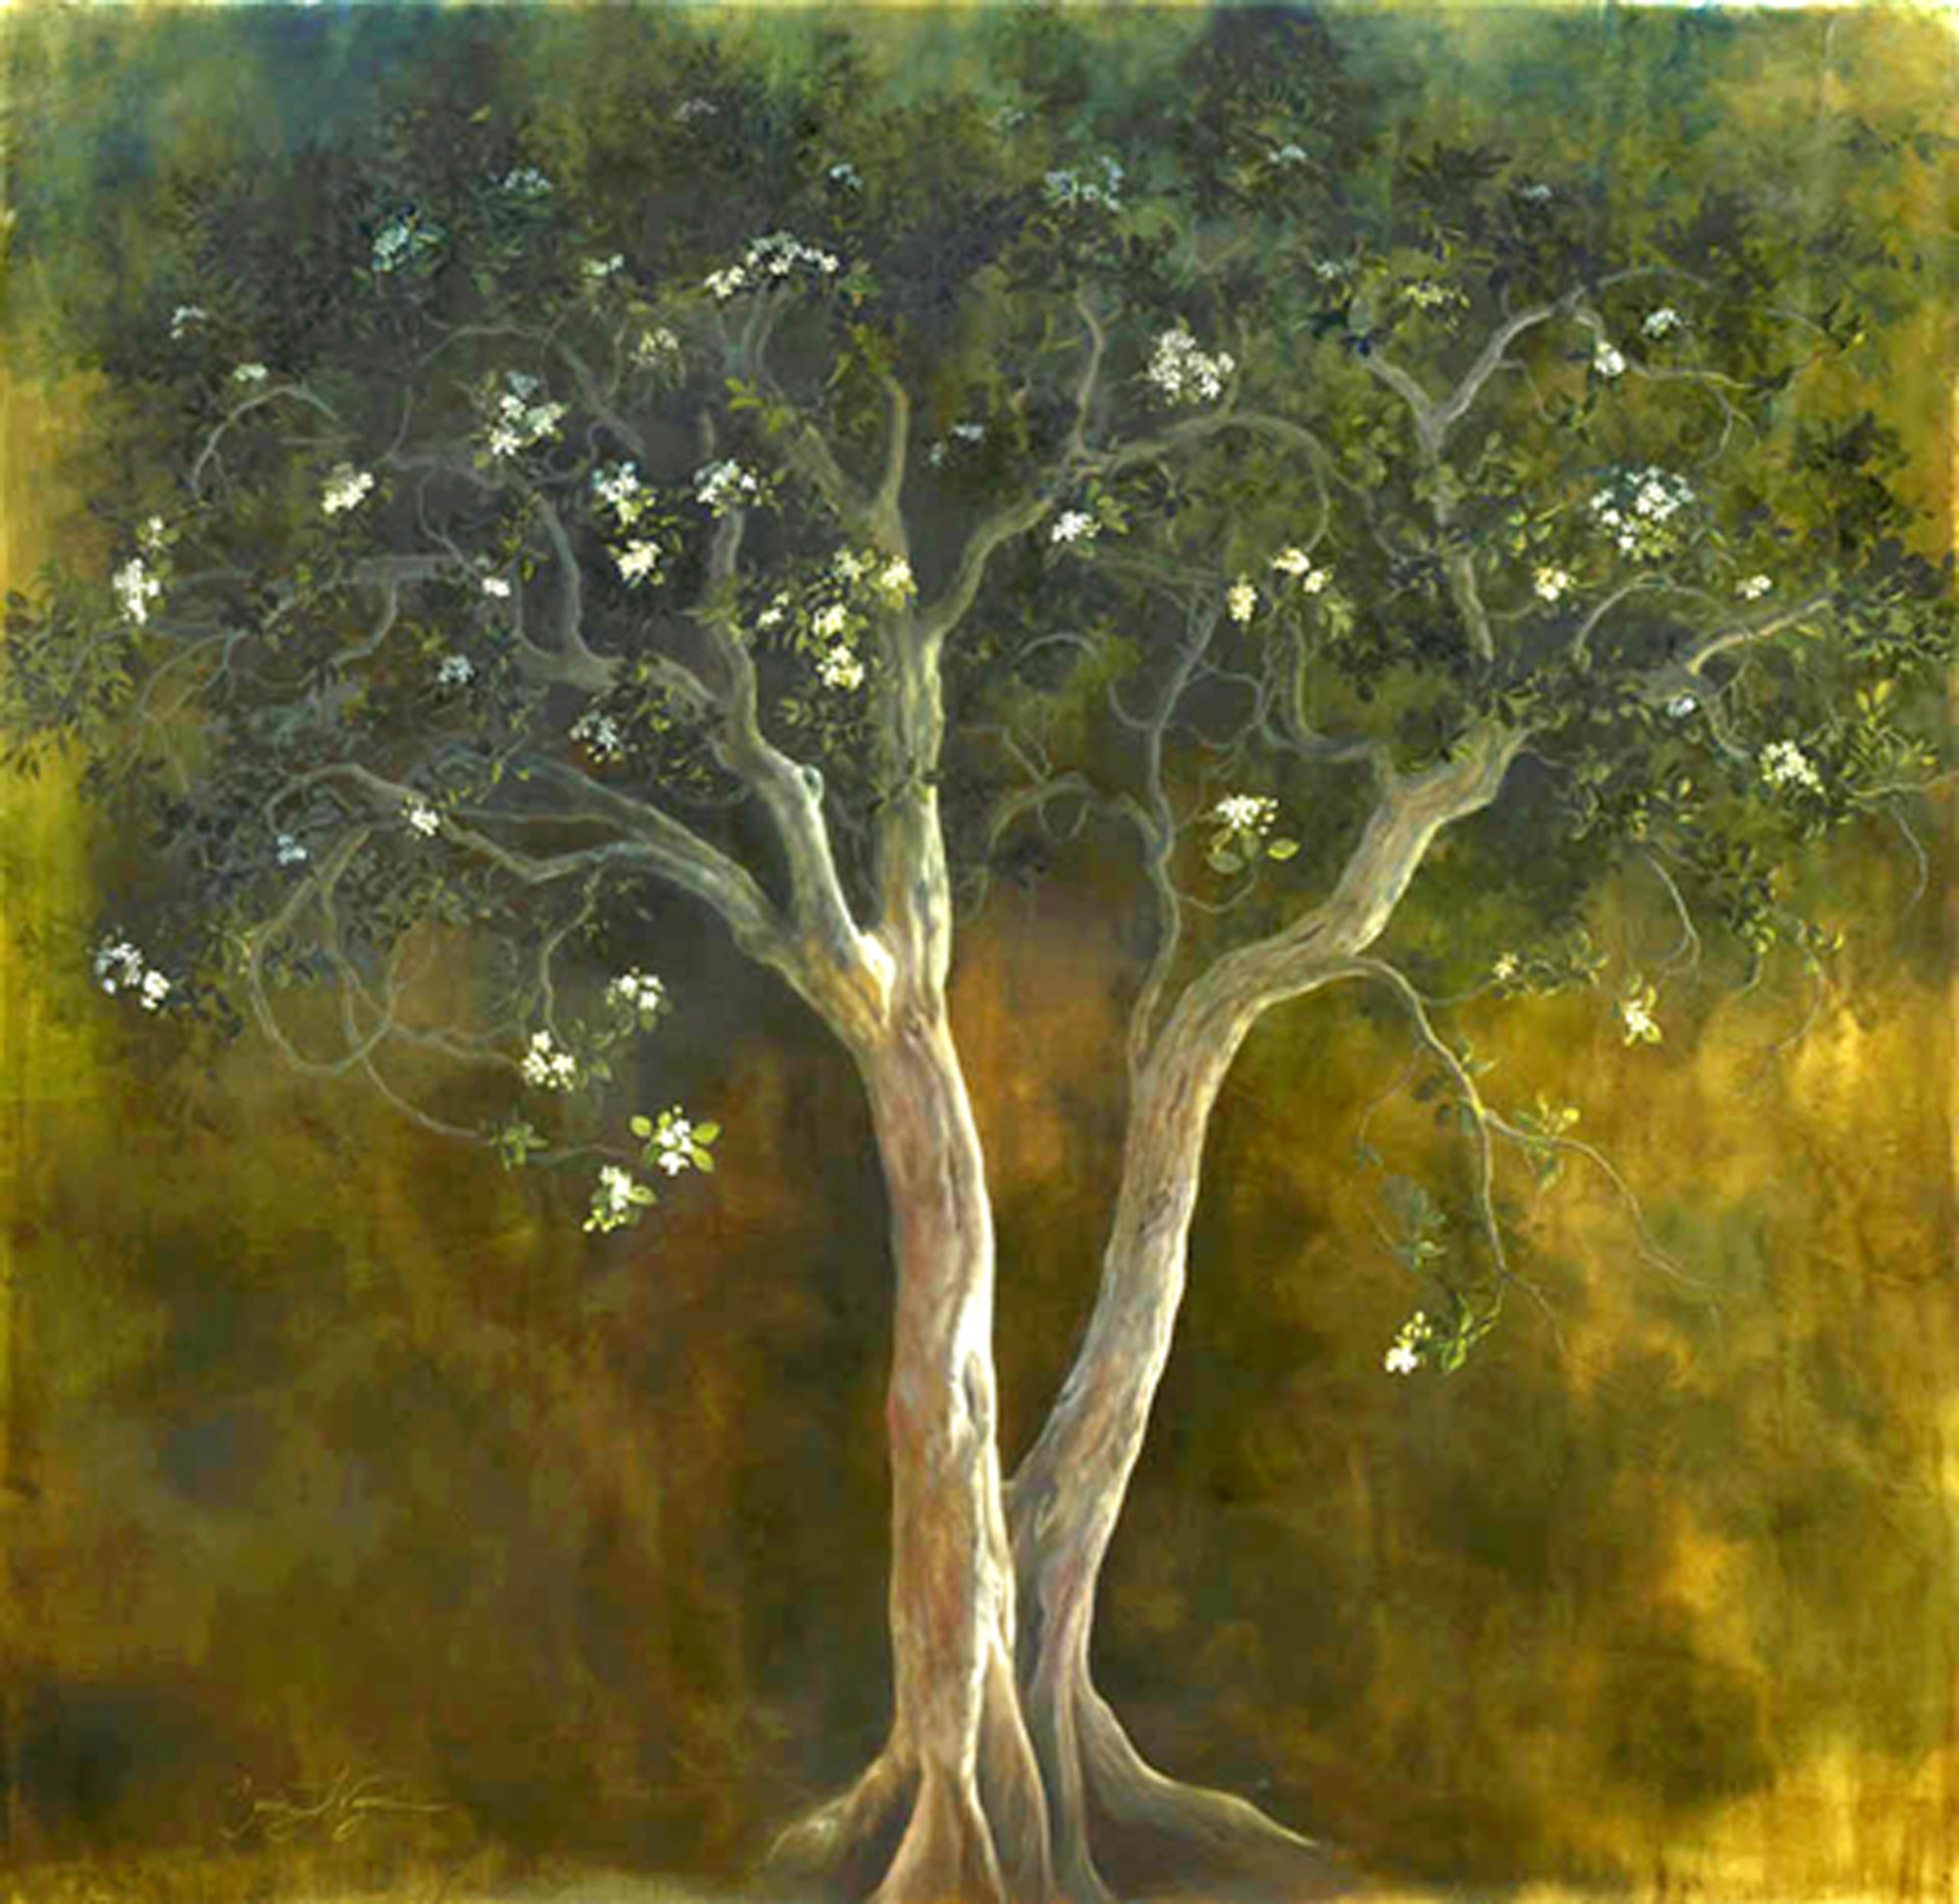 Painting of an orange jasmine tree